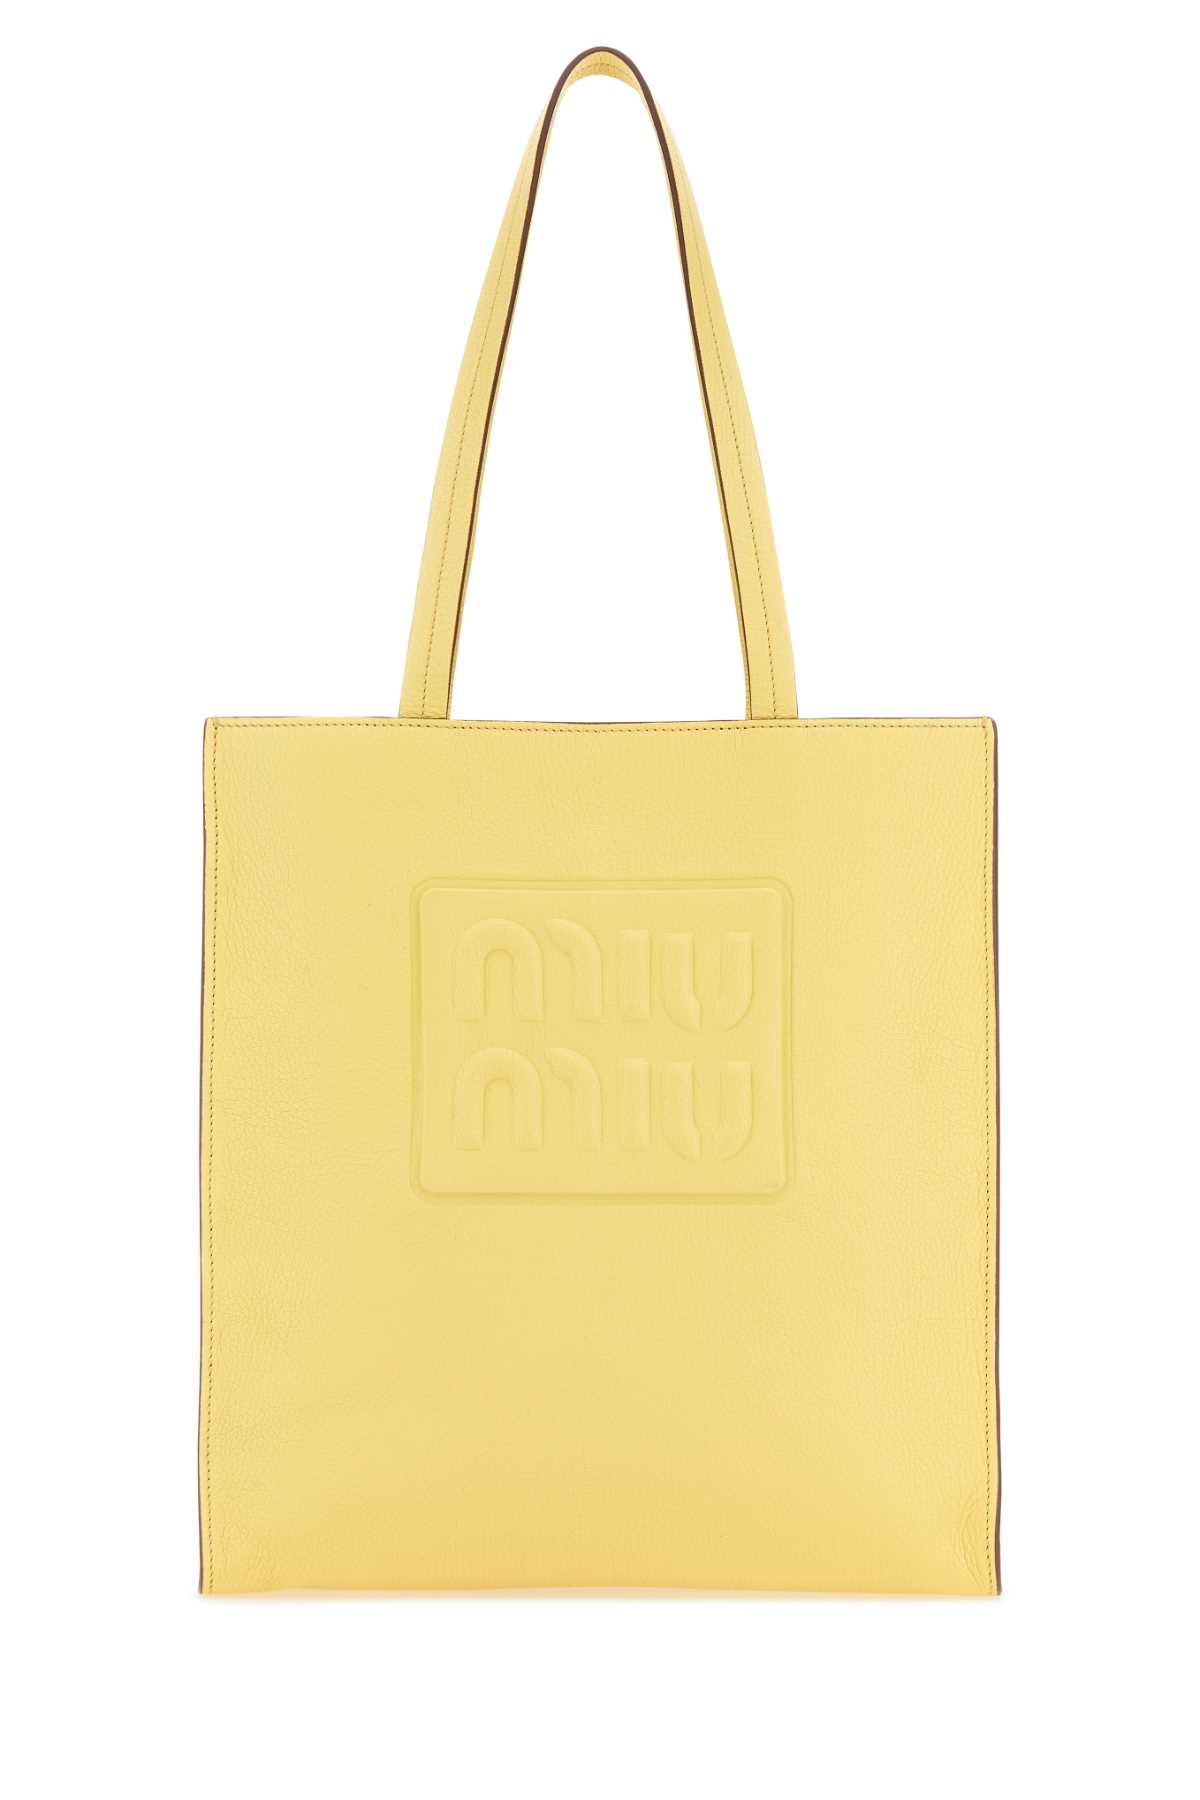 Pastel Yellow Leather Shopping Bag